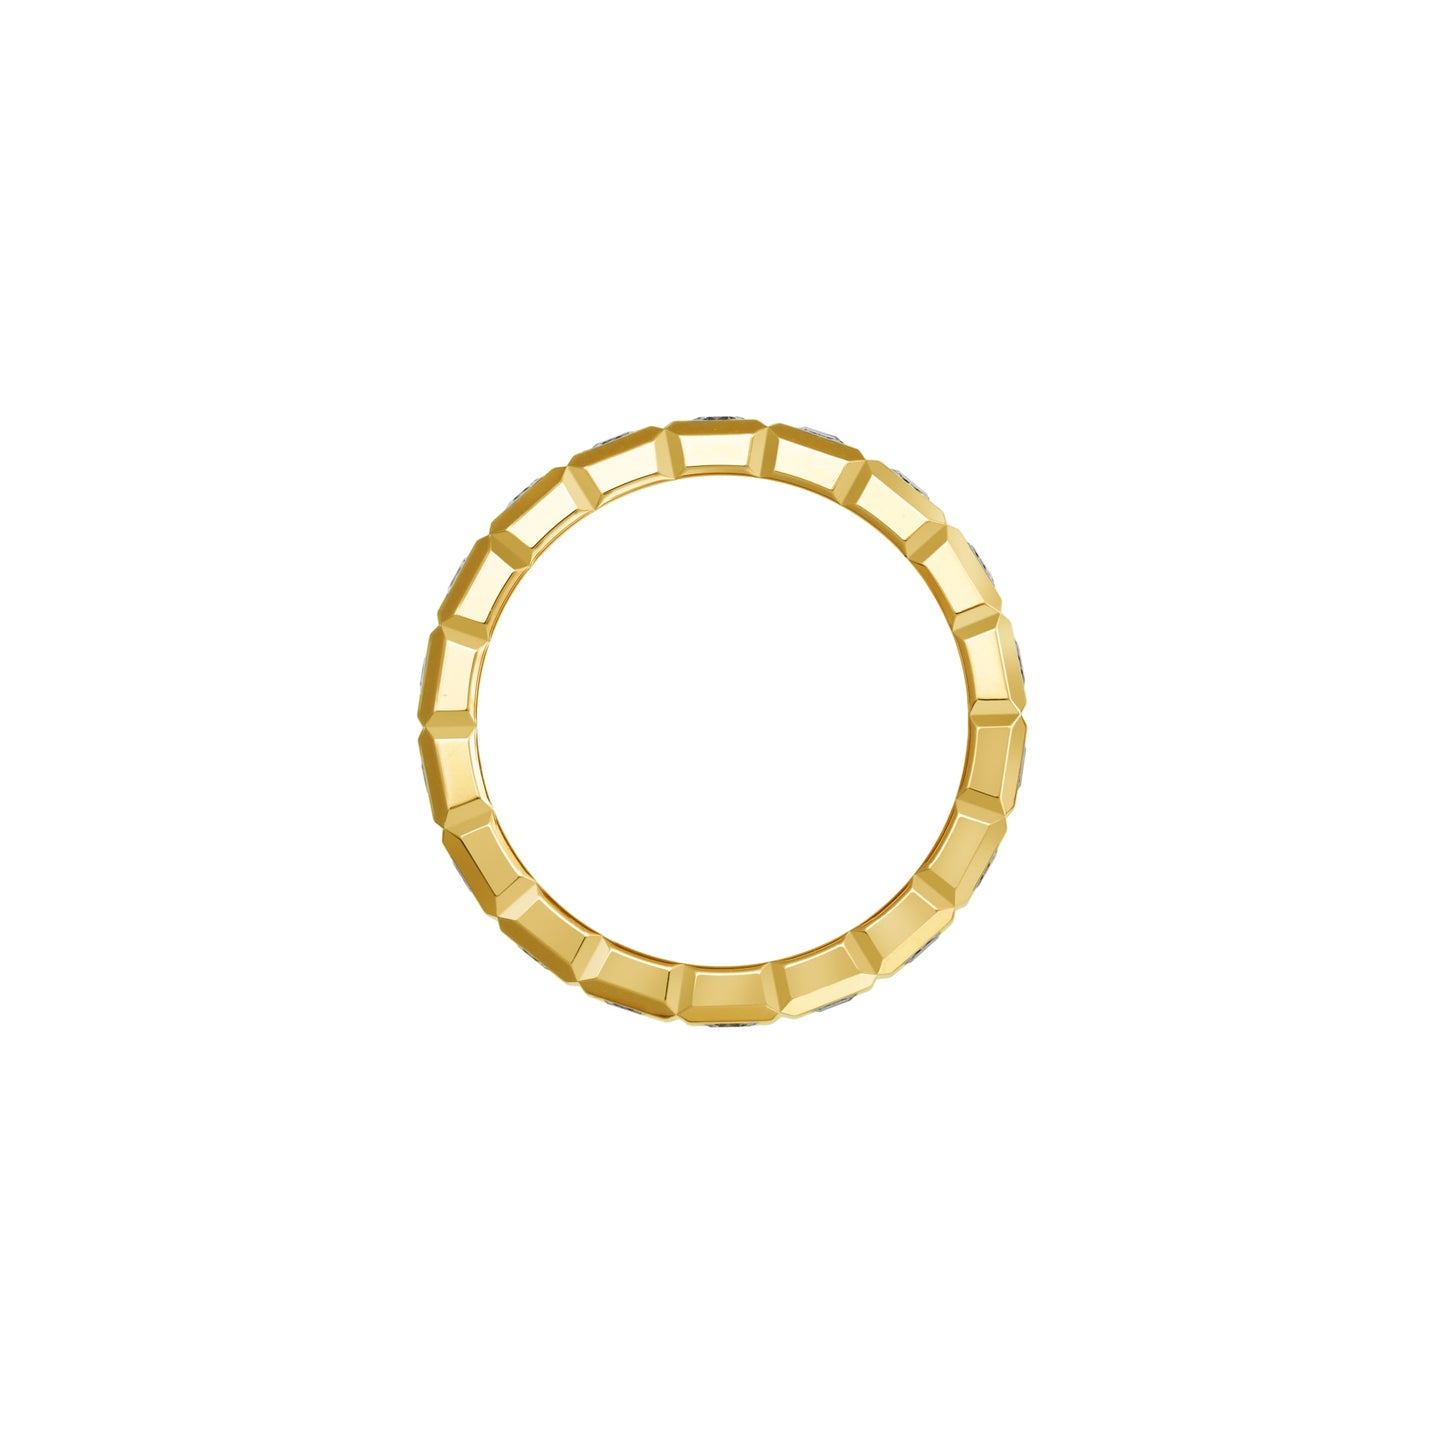 ICE CUBE RING, ETHICAL YELLOW GOLD, HALF-SET DIAMONDS 829834-0039